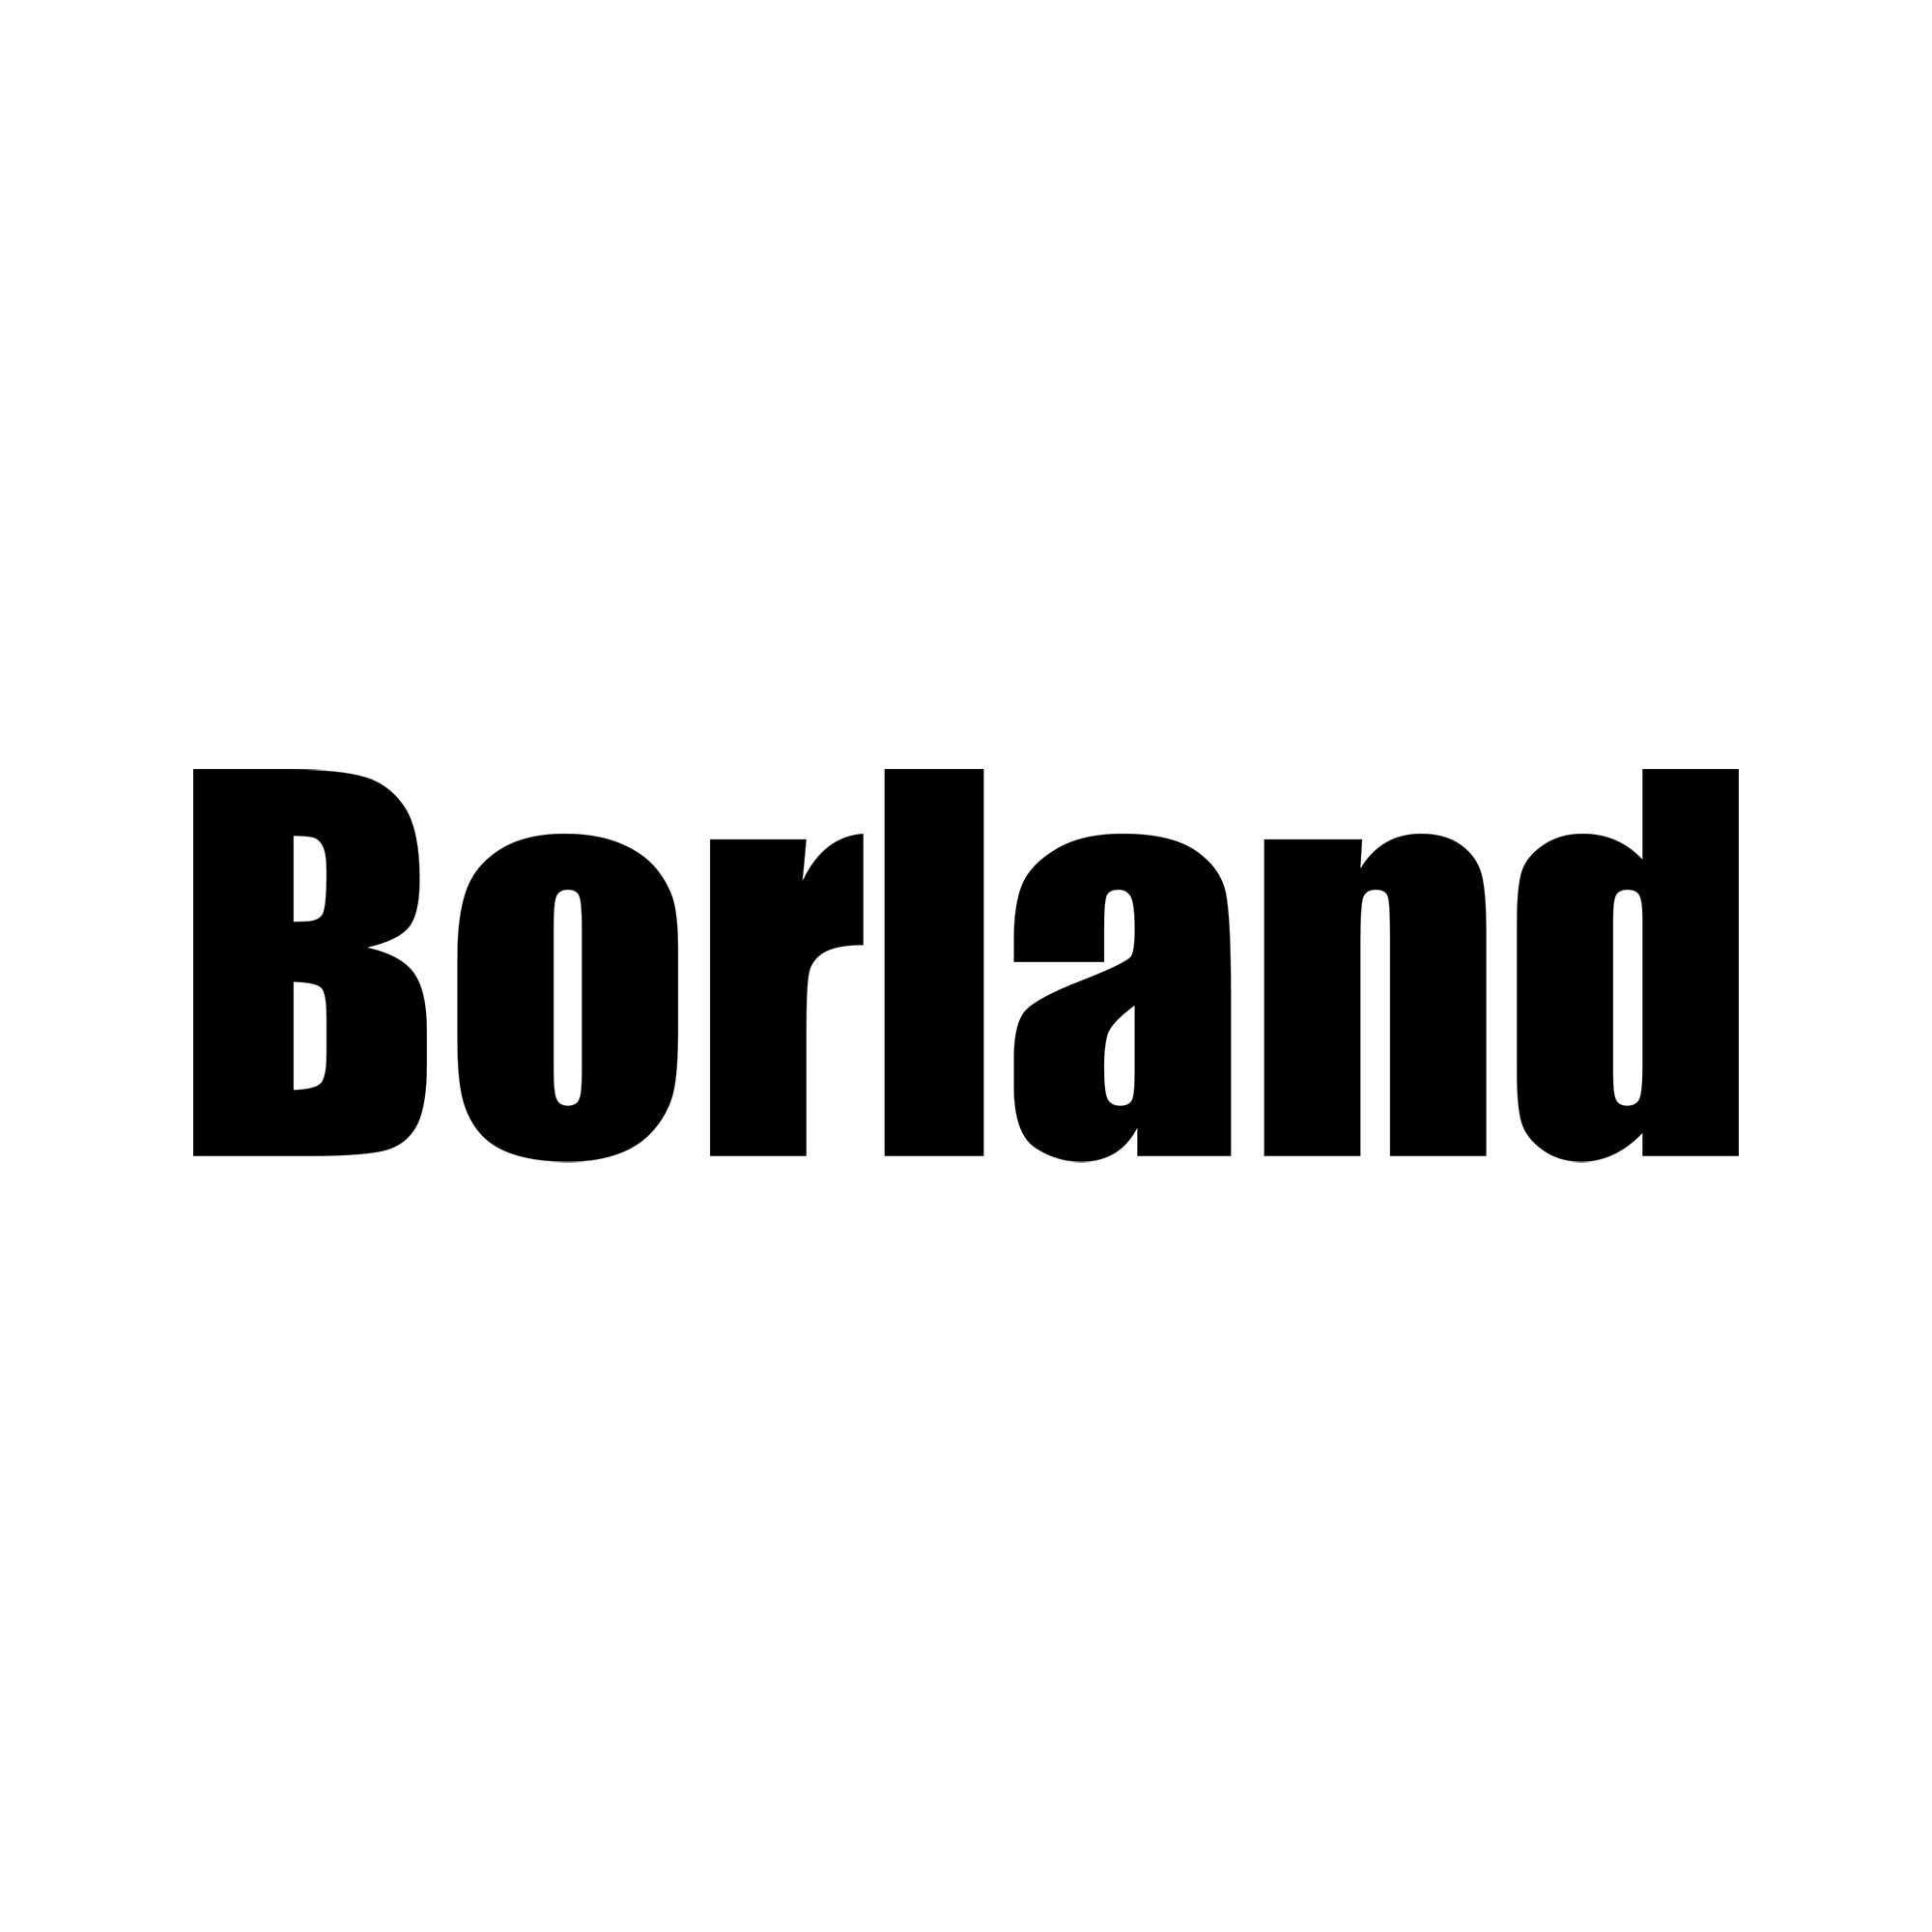 borland logo